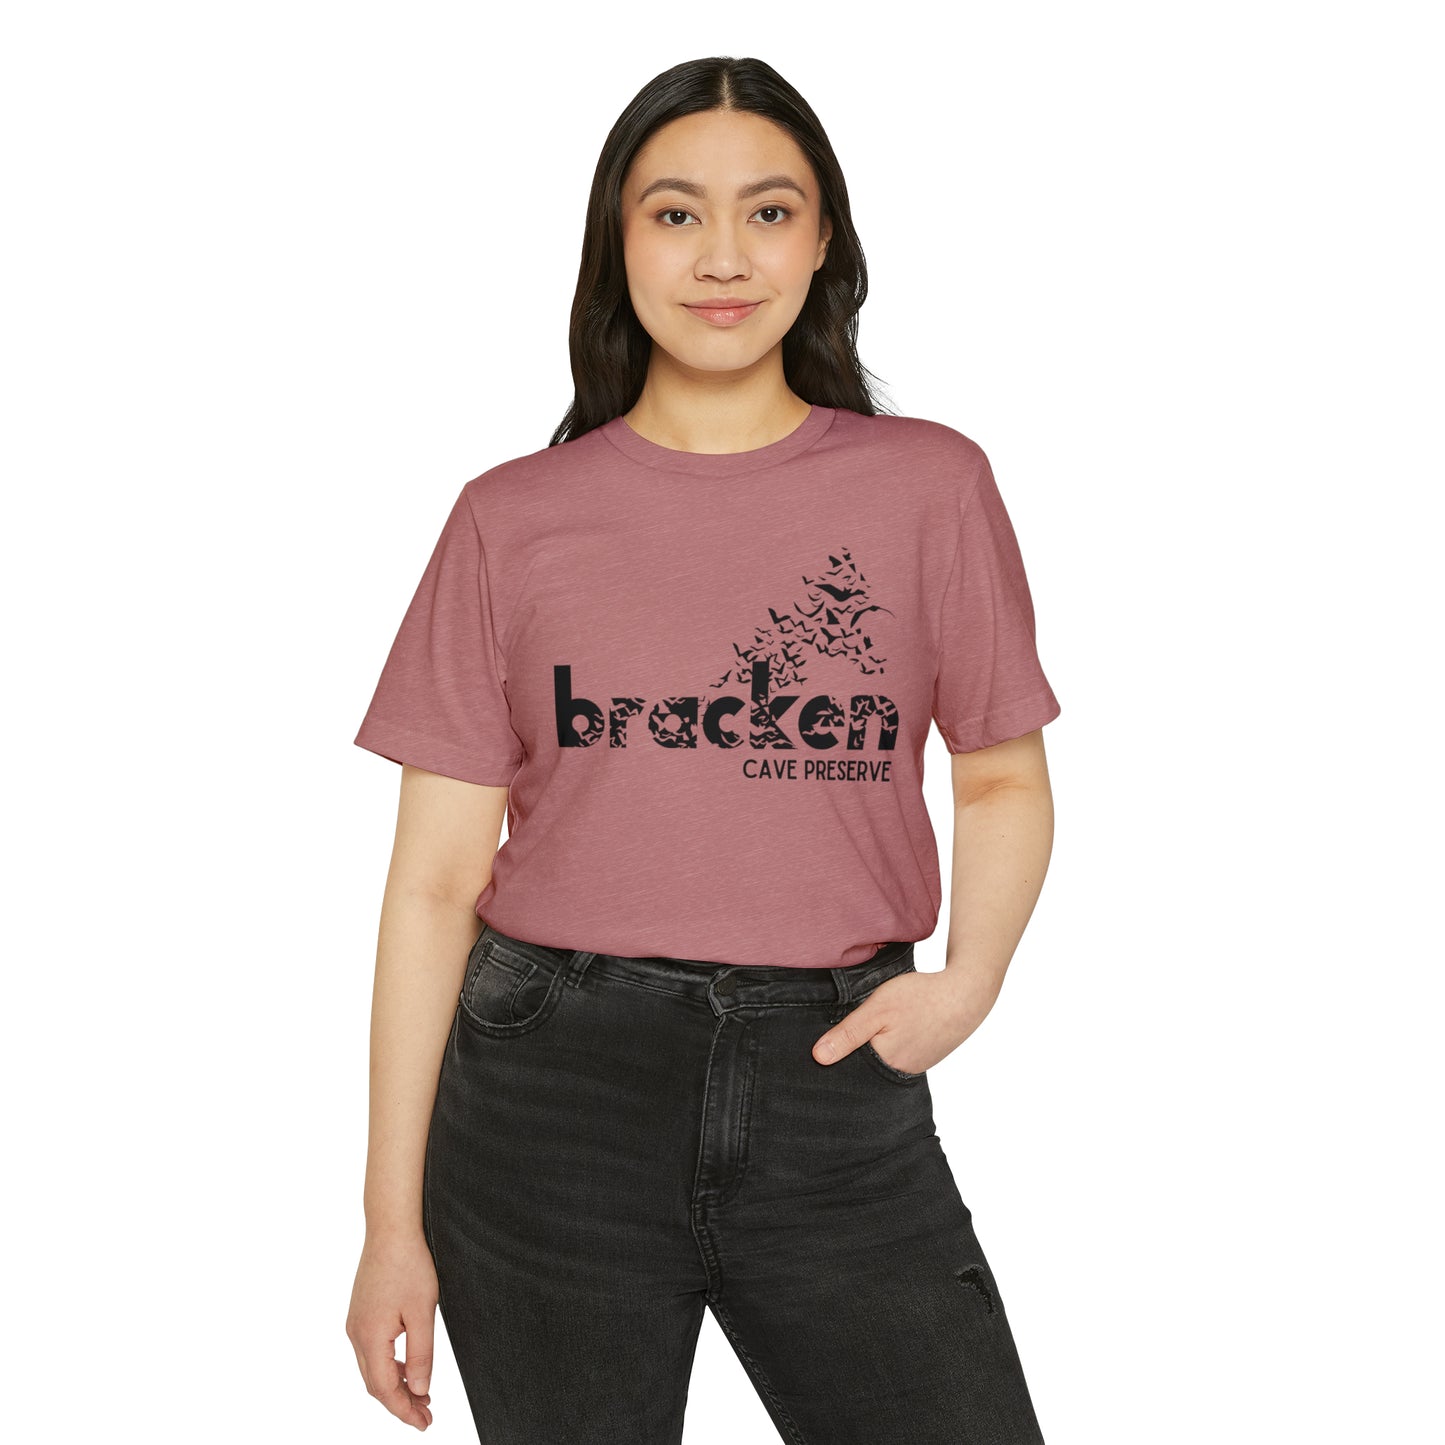 Bracken Cave Preserve - Camiseta reciclada orgánica unisex